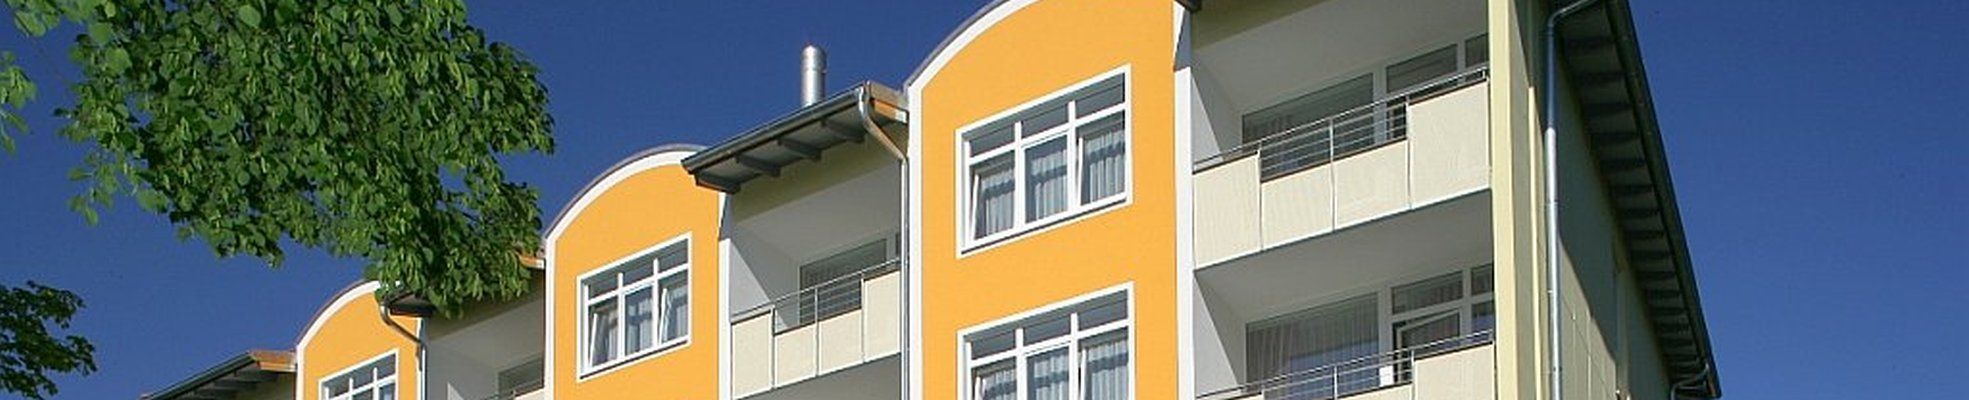 Kurhotel Sonnenhof - Kururlaub in Bad Füssing mit Haustürabholung